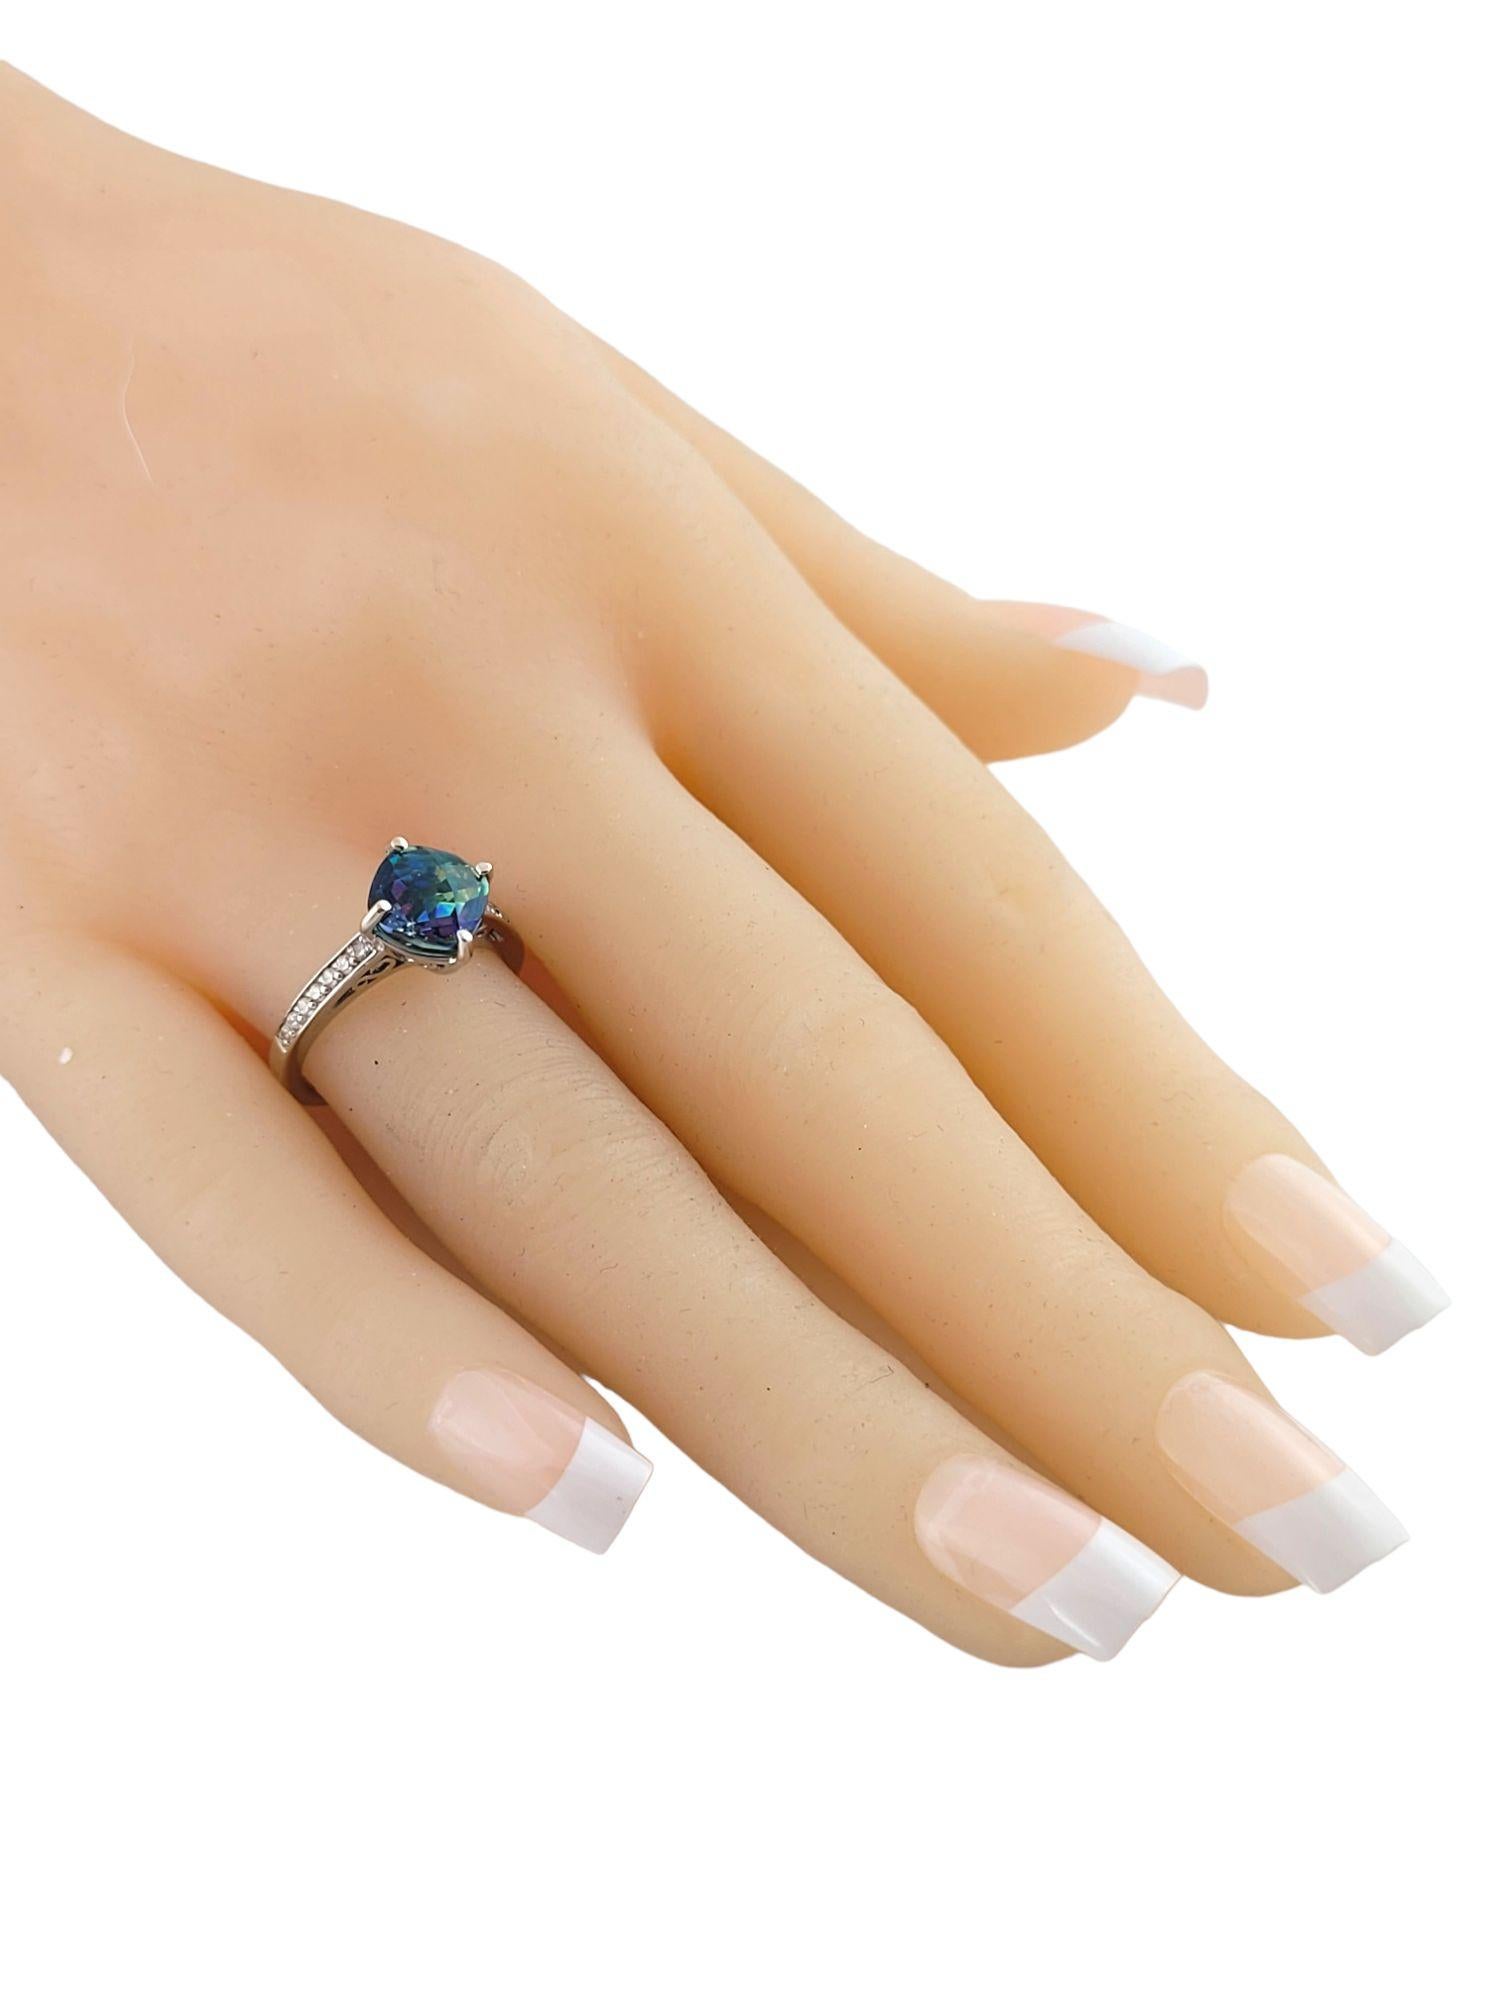 Square Cut 14K White Gold Mystic Topaz Diamond Ring Size 6.75 #14768 For Sale